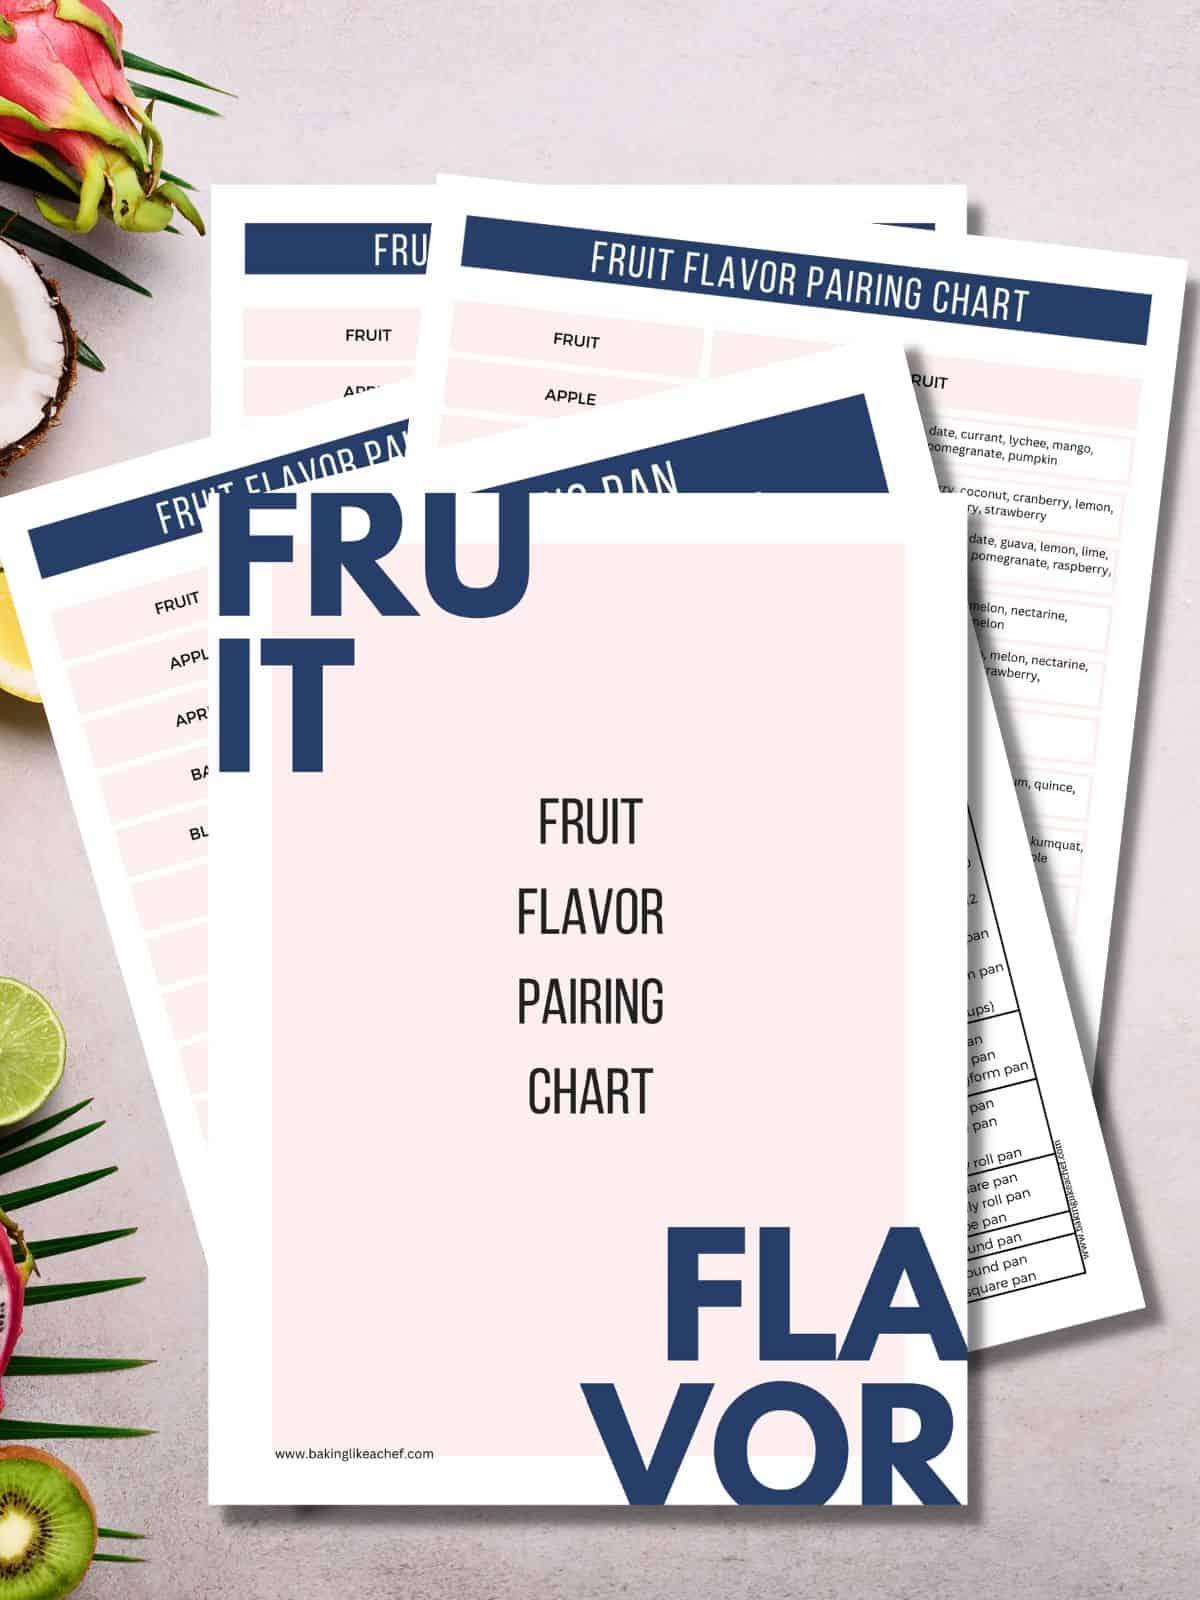 Fruit flavor pairing chart Mockup: Close up